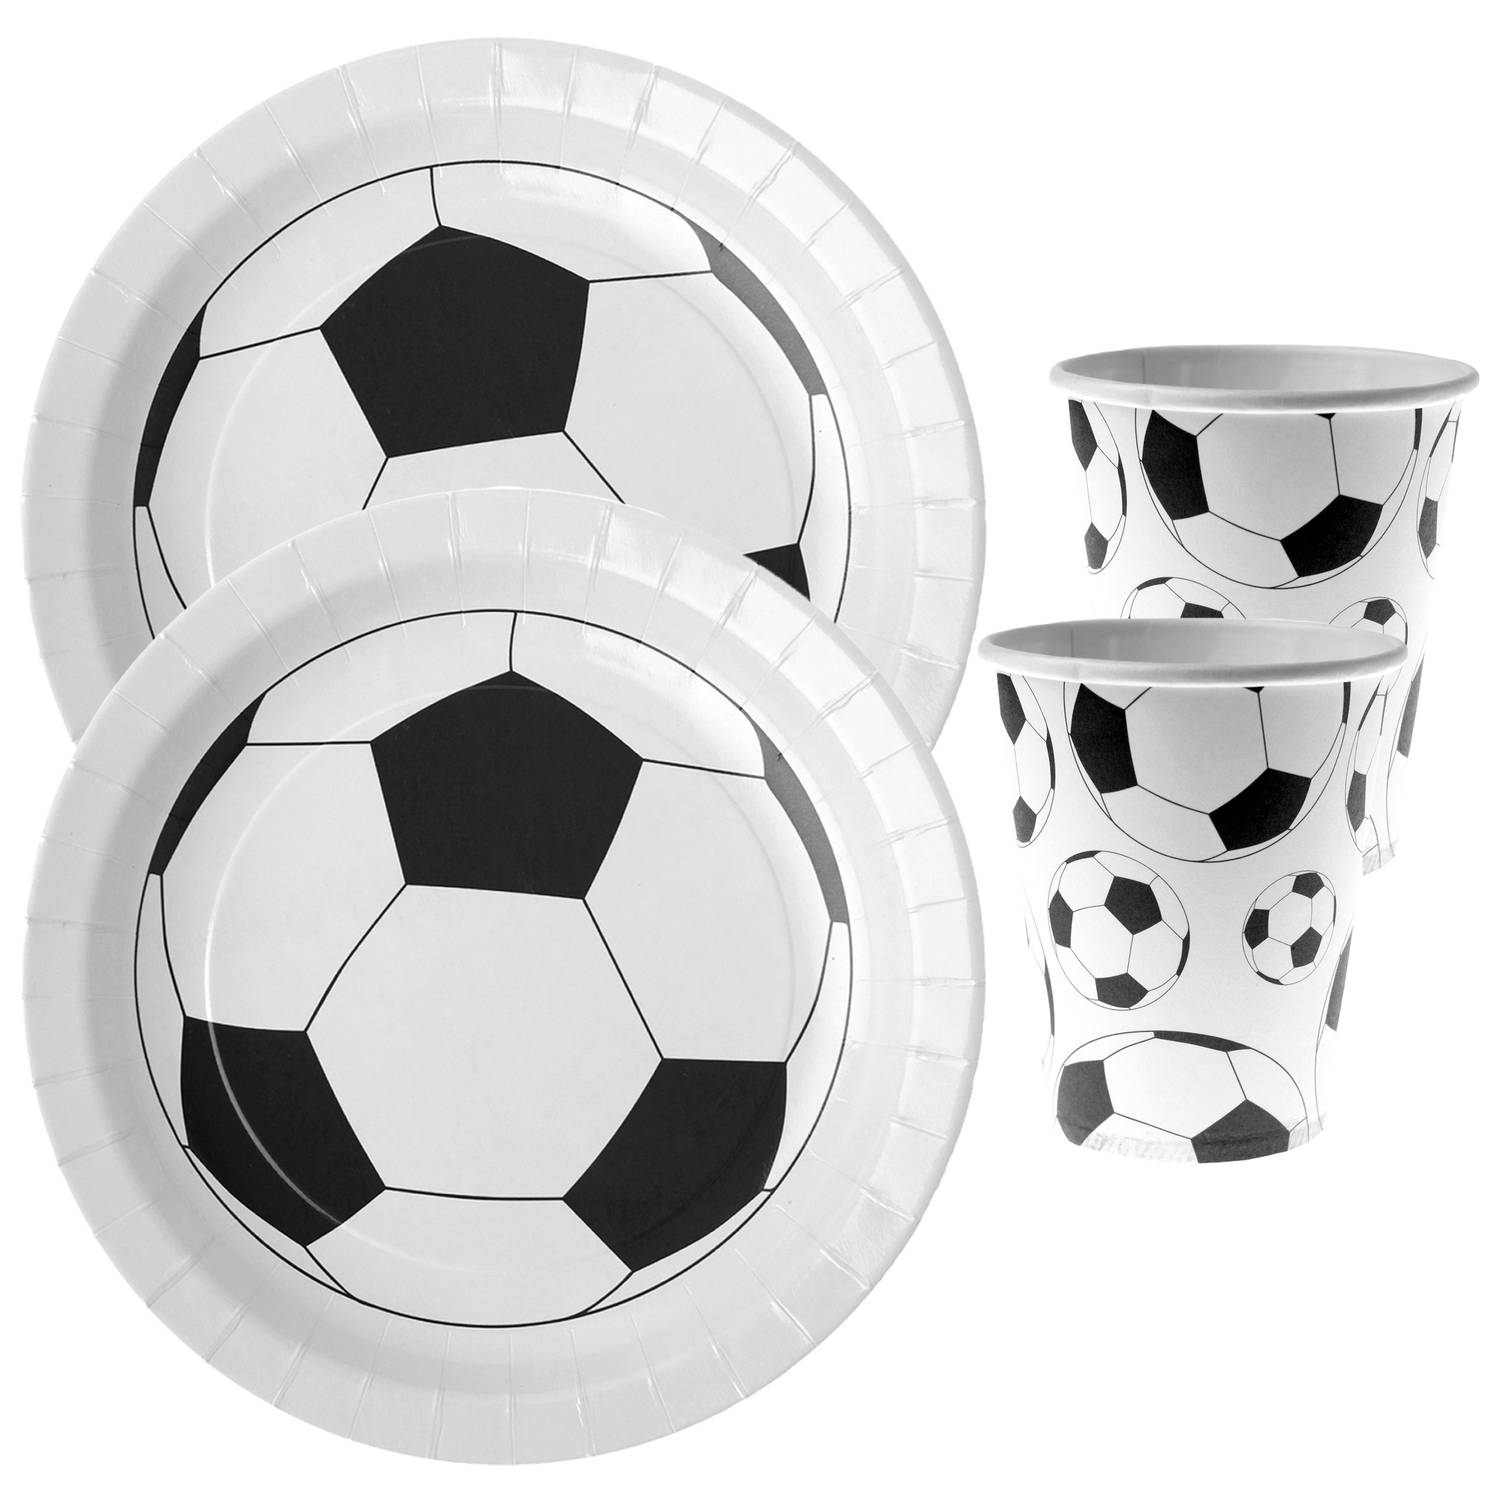 Voetbal thema feest wegwerp servies set 10x bordjes-10x bekers wit-zwart Feestpakketten